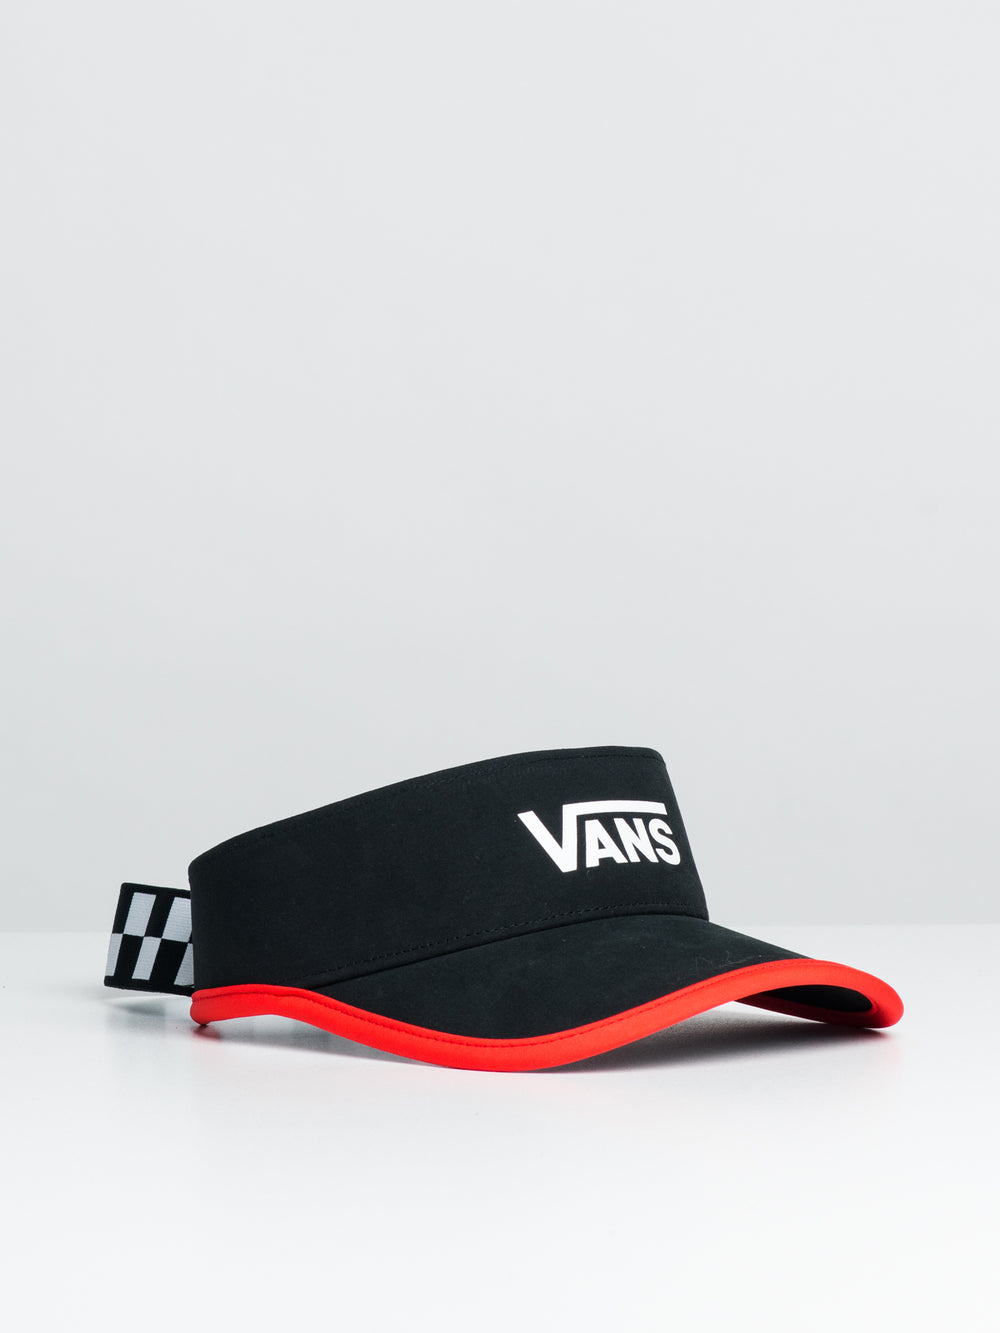 VANS TURVY VISOR HAT  - CLEARANCE